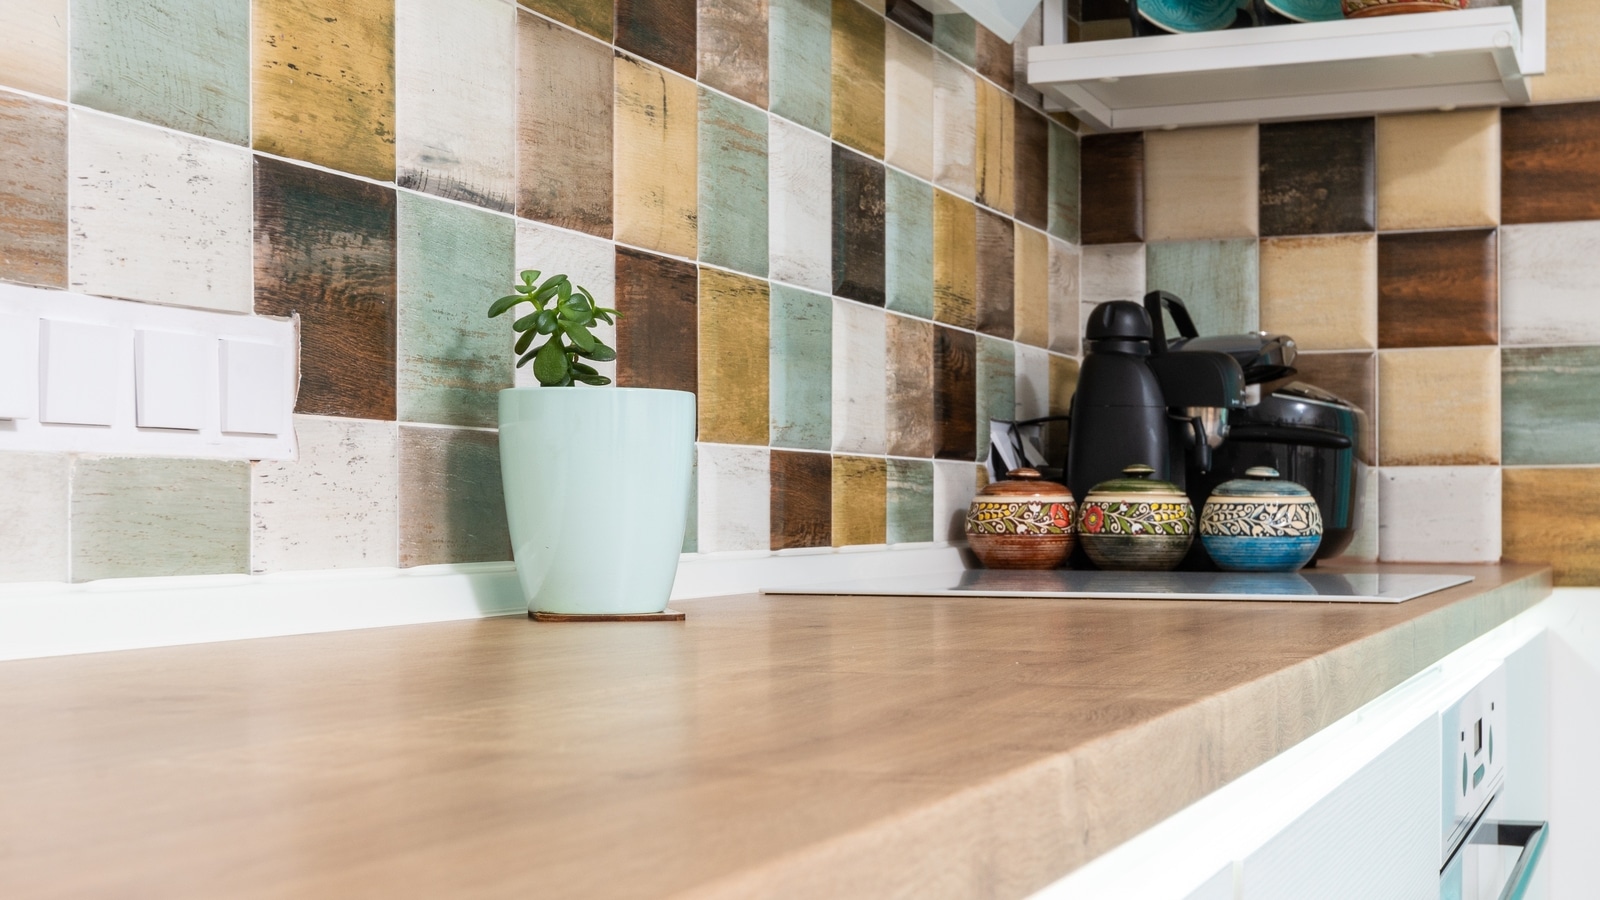 Home interior design tips: Marble backsplash ideas for every decor taste